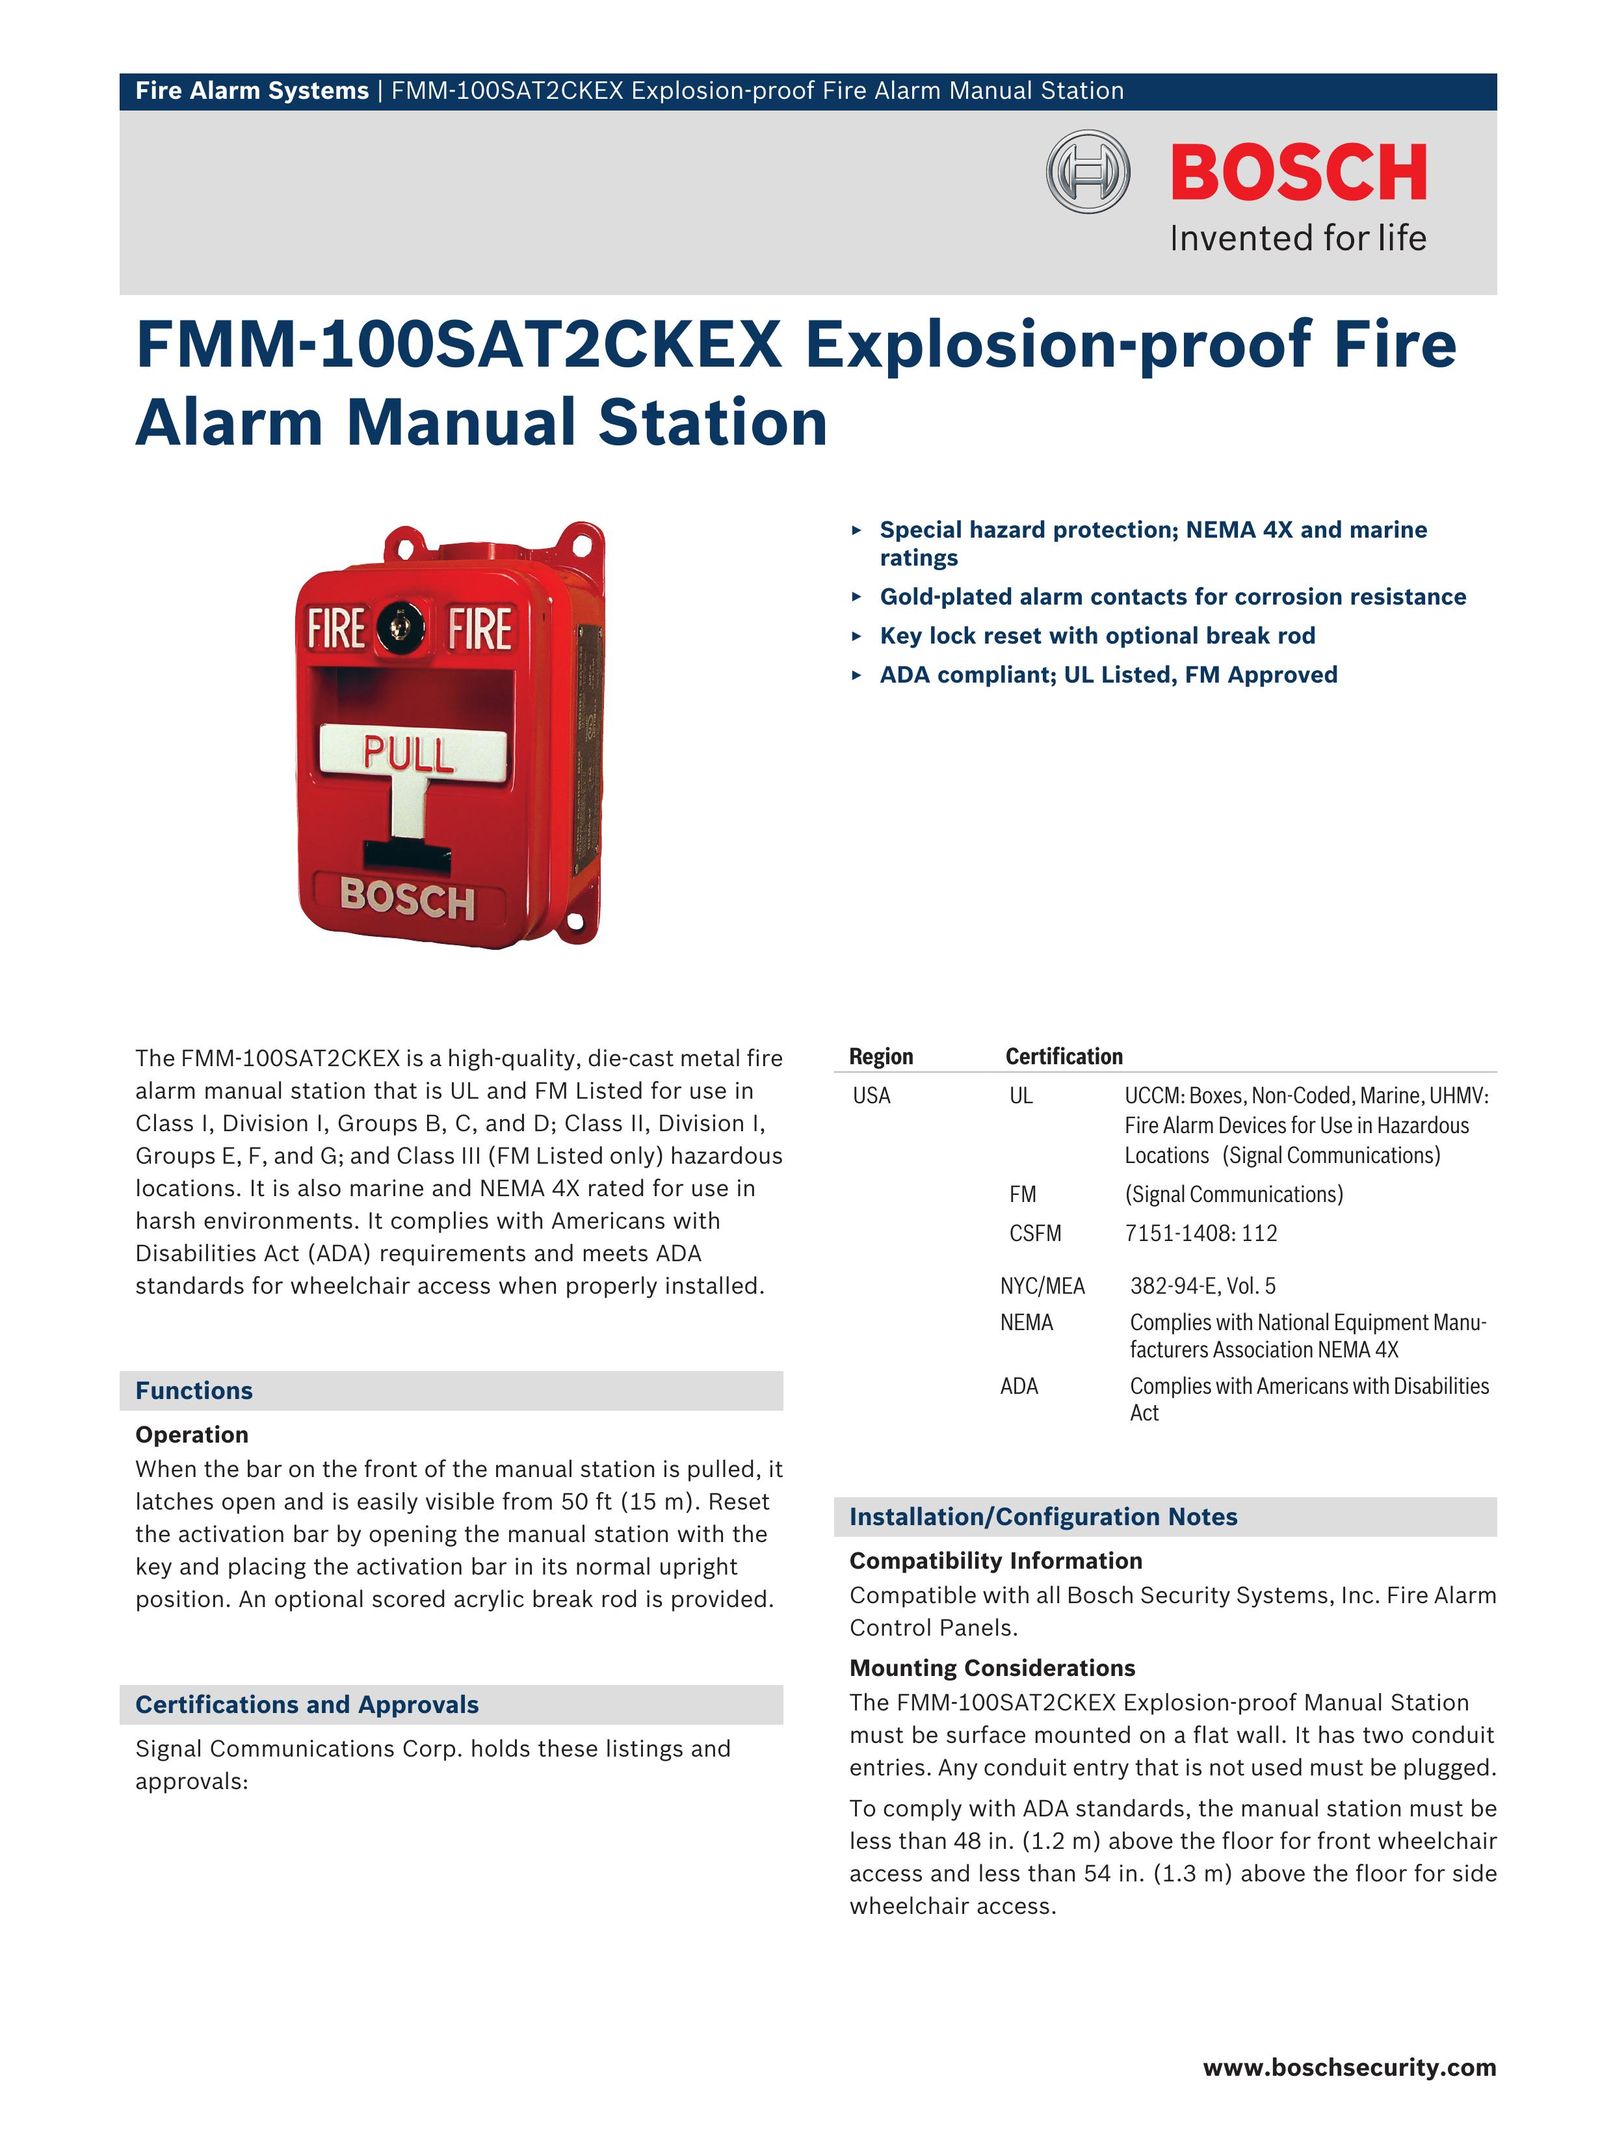 Bosch Appliances FMM100SAT2CKEX Smoke Alarm User Manual